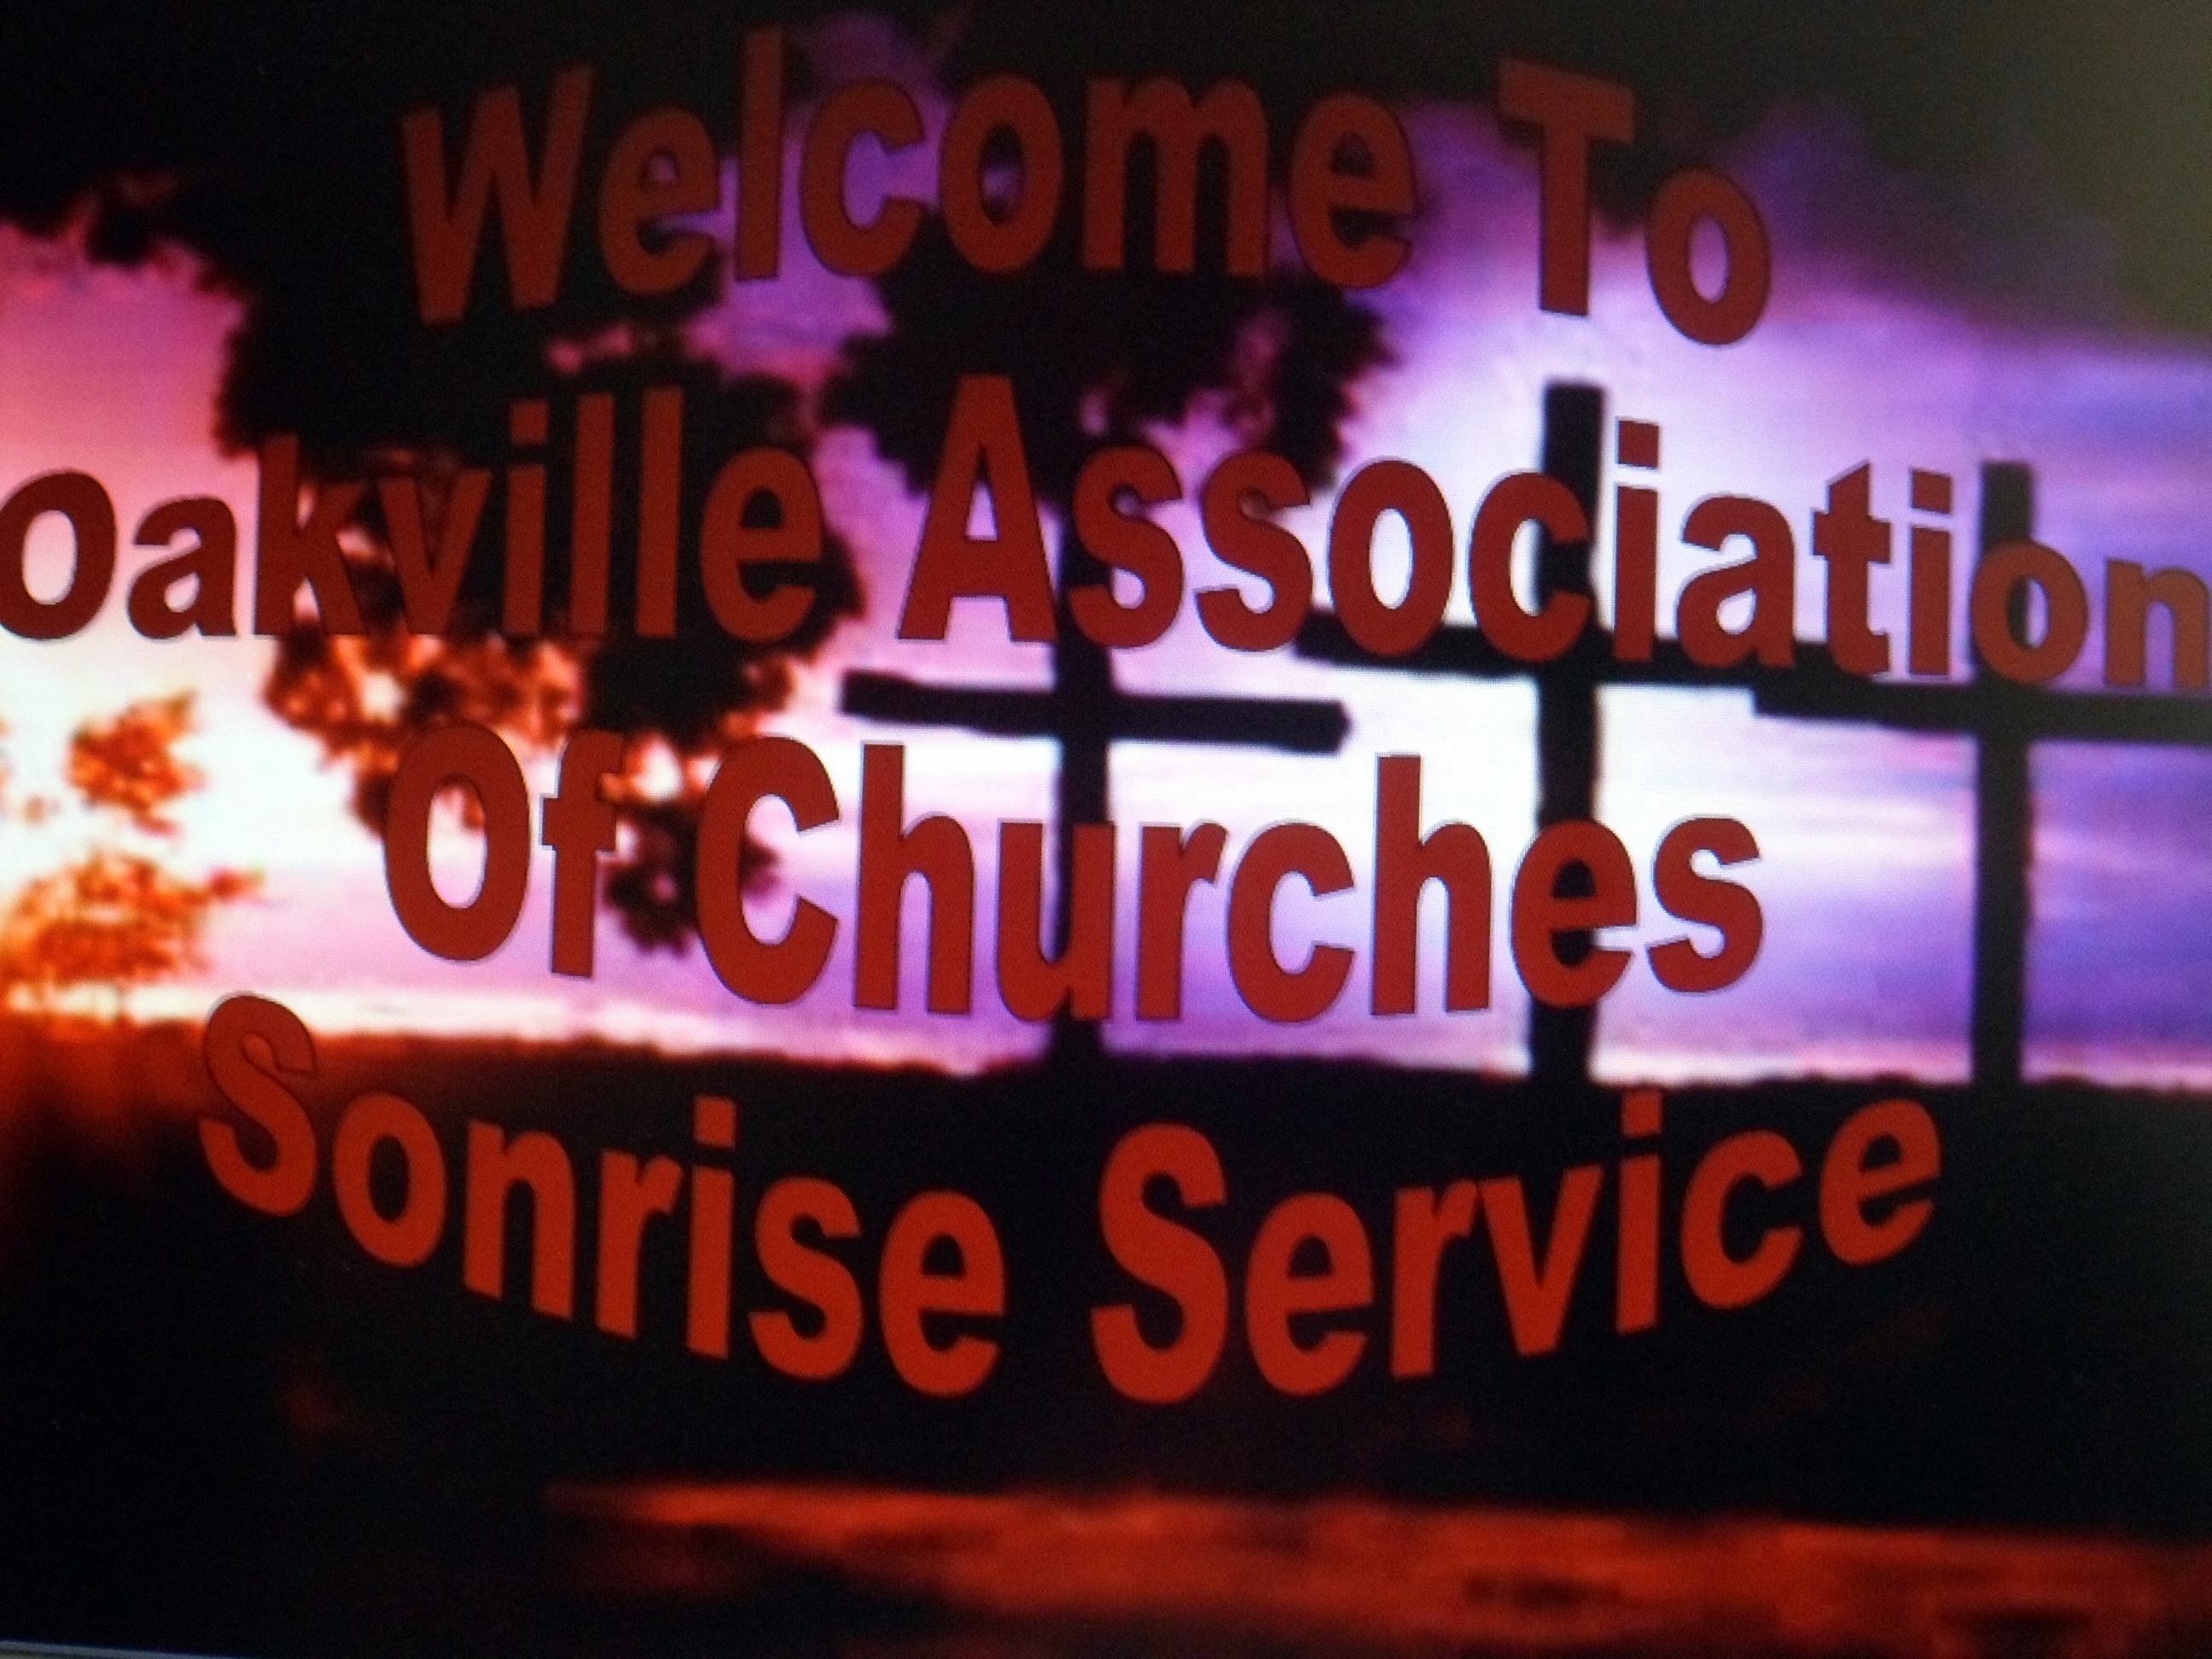 Sonrise Service 04-20-14